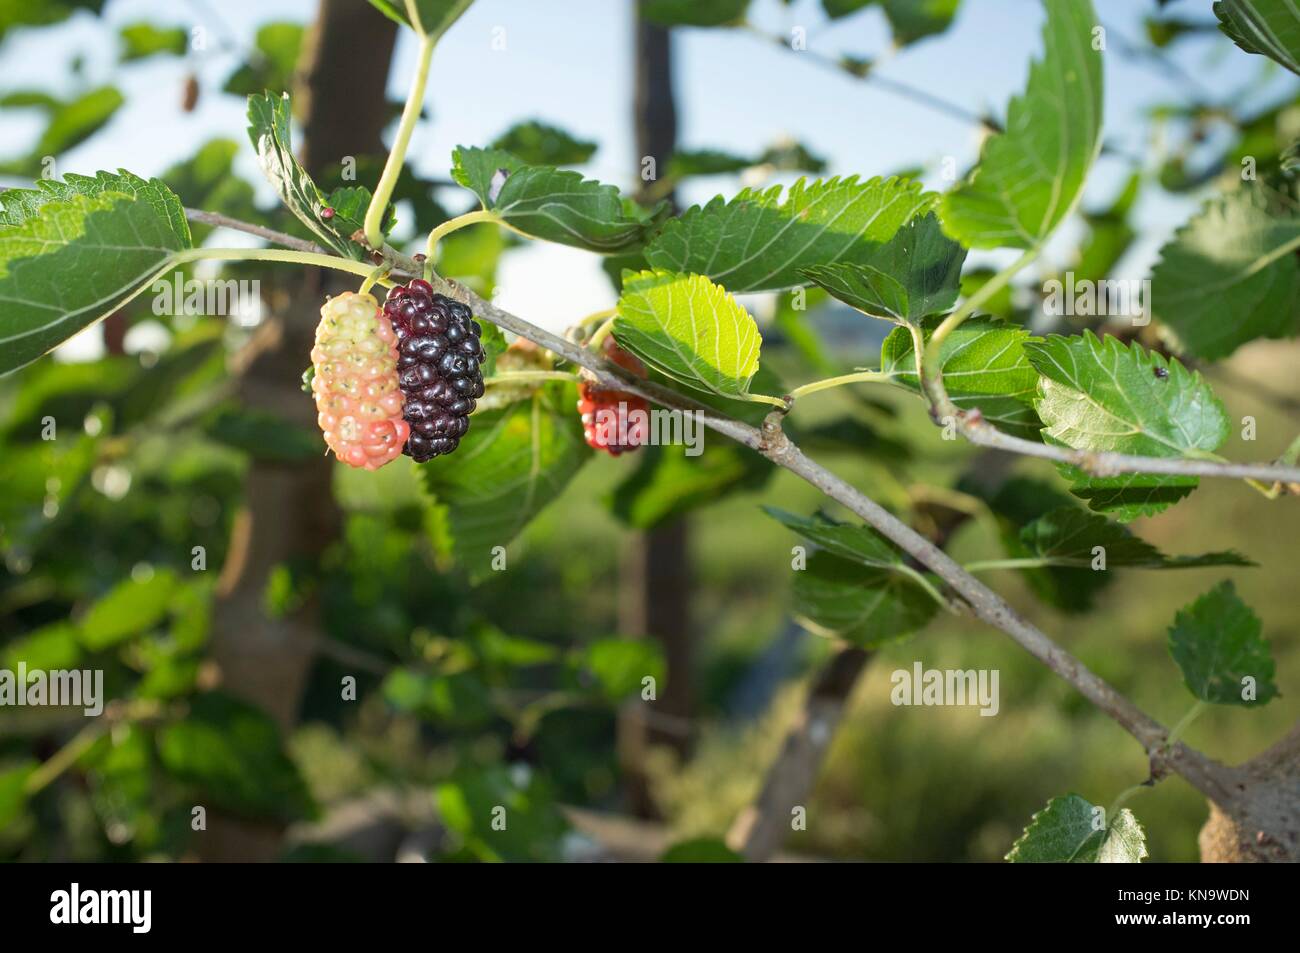 Fruta madura y follaje de morera negro o Morus nigra. Closeup. Foto de stock